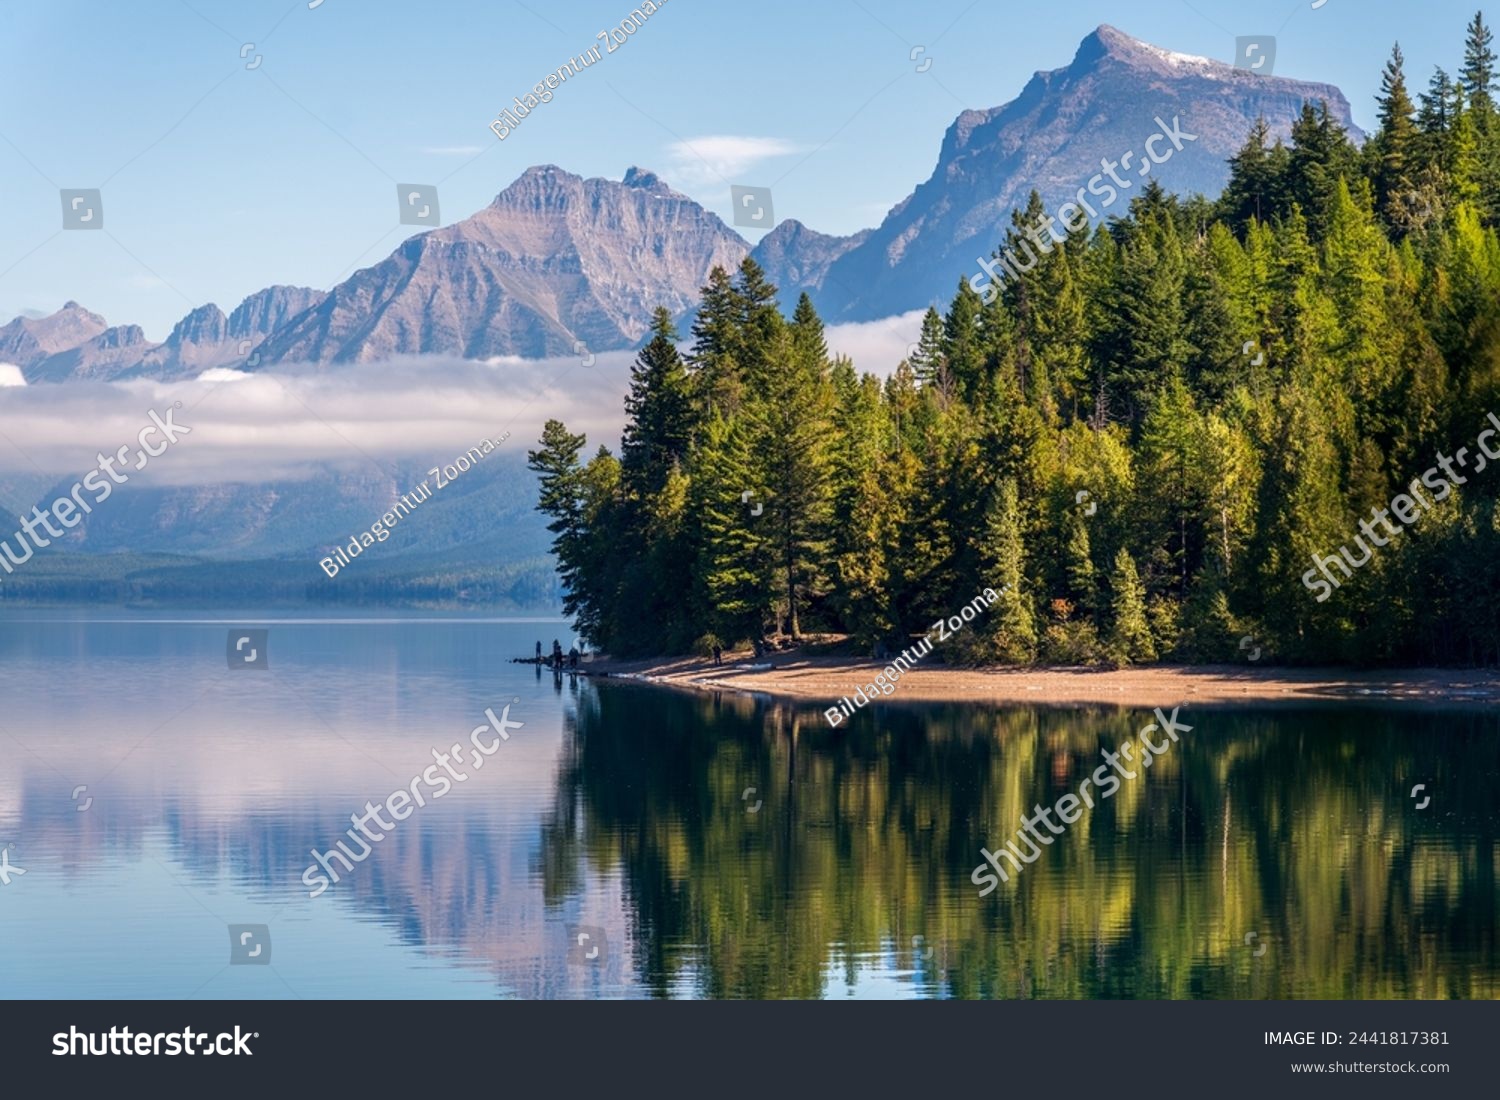 LAKE MCDONALD, MONTANAUSA - SEPTEMBER 20 : View of Lake McDonald in Montana on September 20, 2013. Unidentified people. #2441817381